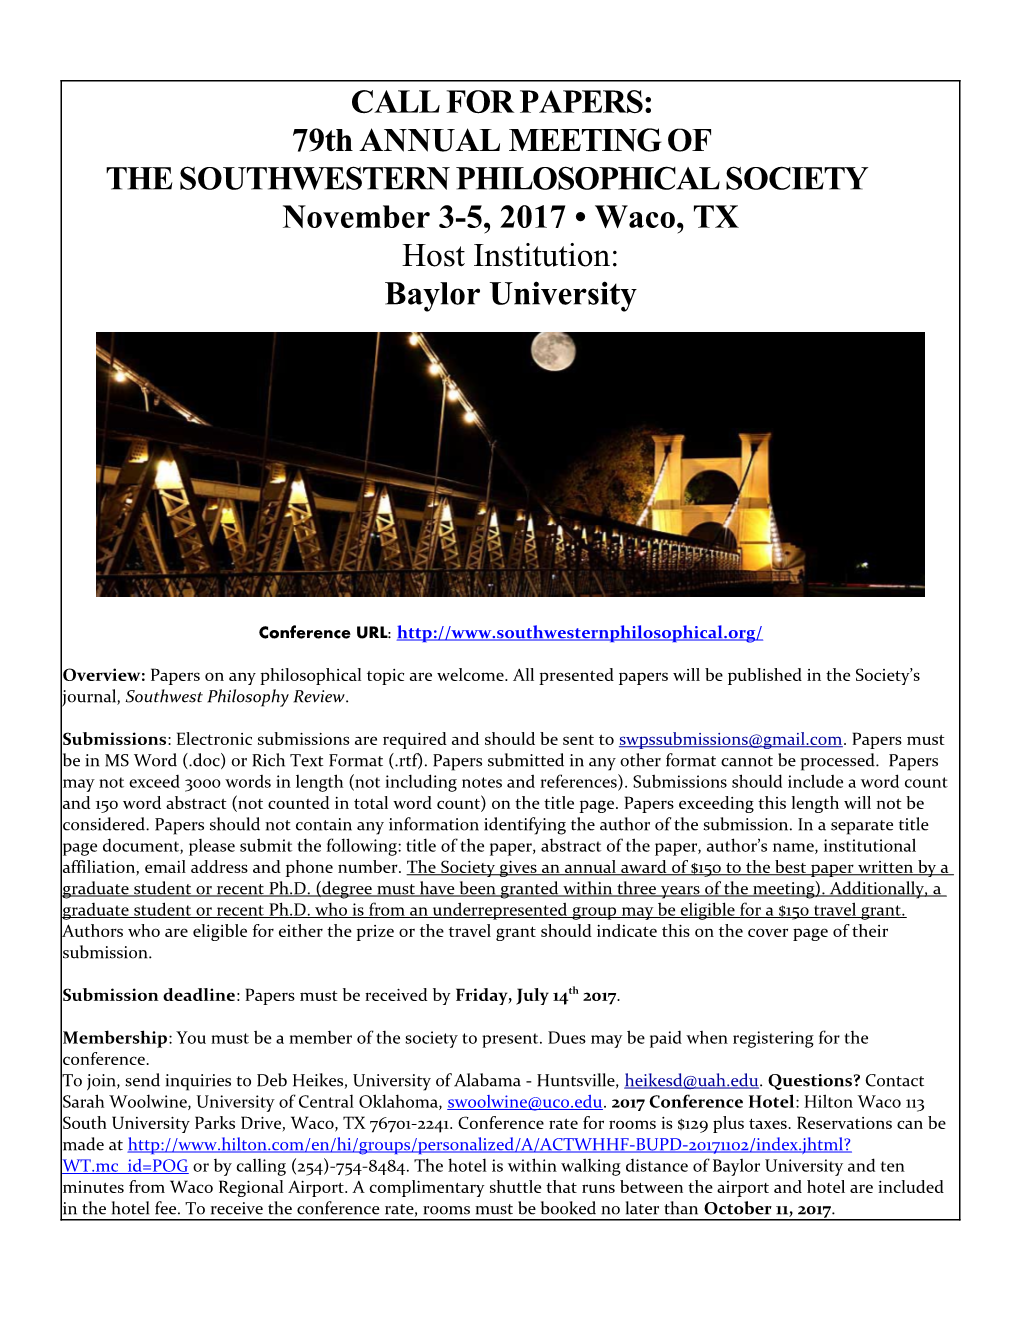 The Southwestern Philosophical Society